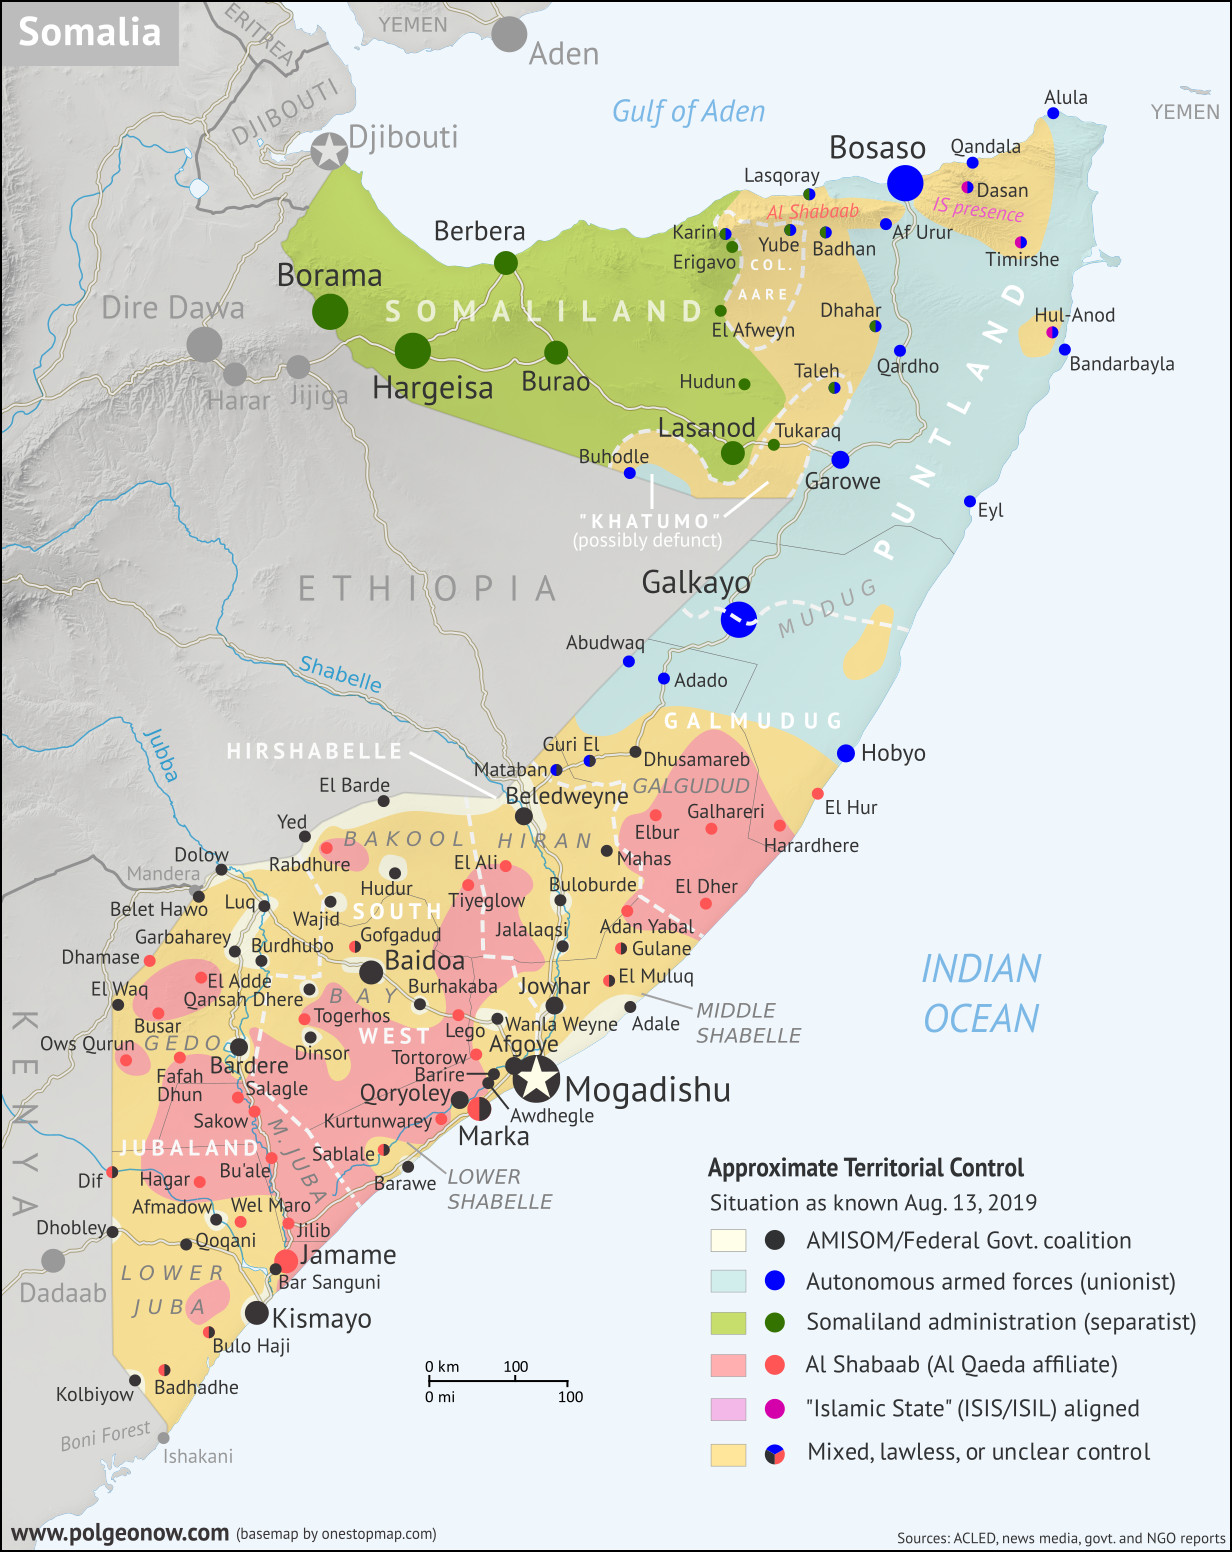 2019-08-13_who-controls-somalia-map-with-states.jpg